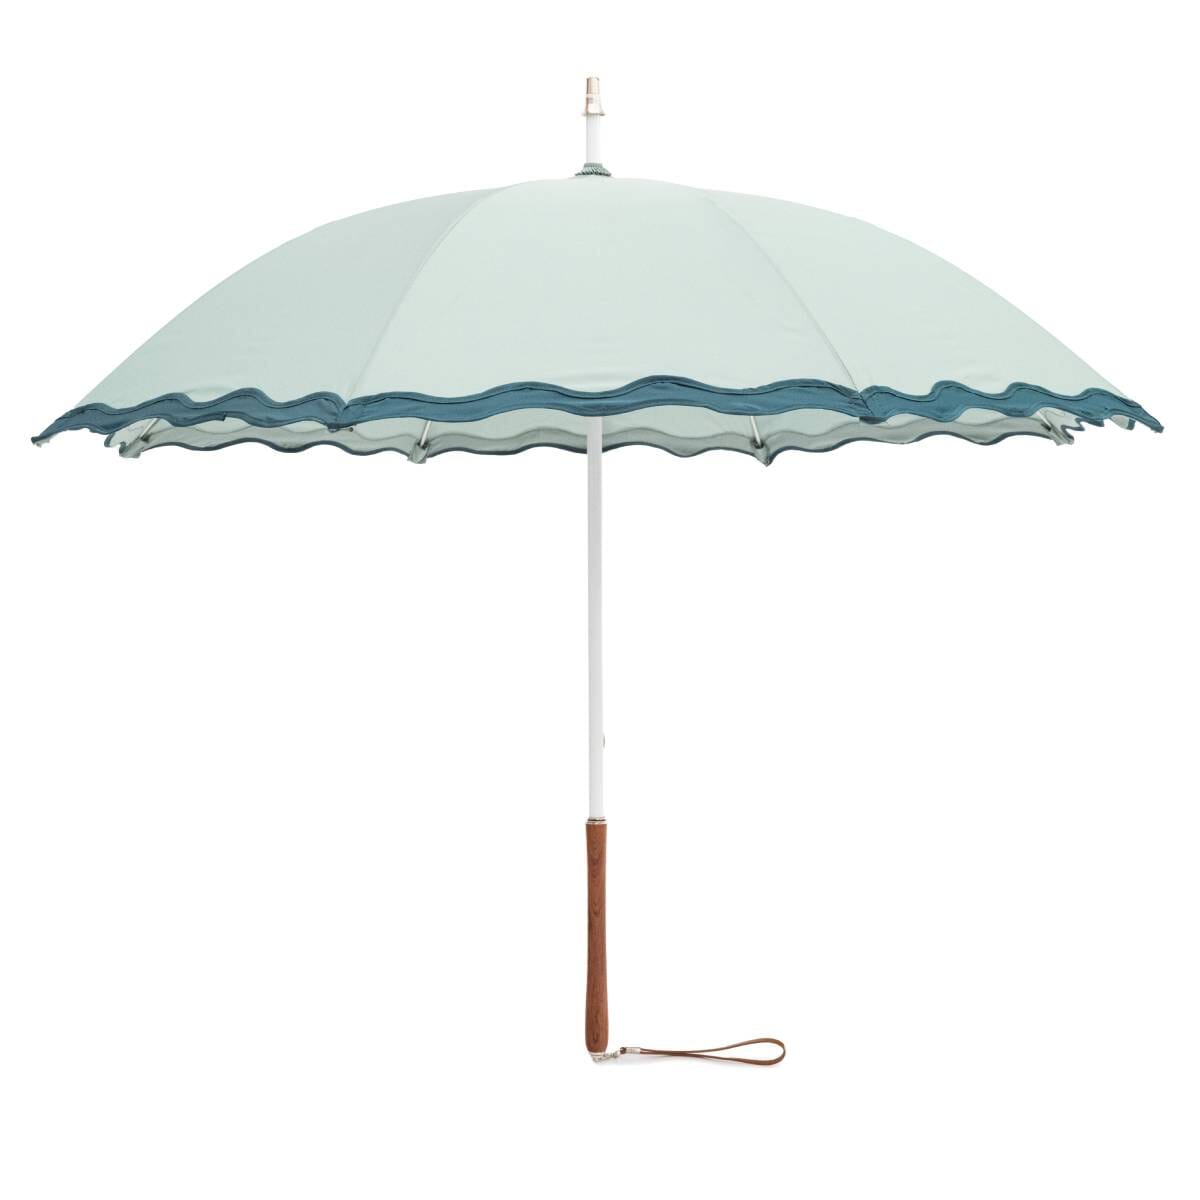 The Rain Umbrella - Rivie Green Rain Umbrella Business & Pleasure Co Aus 